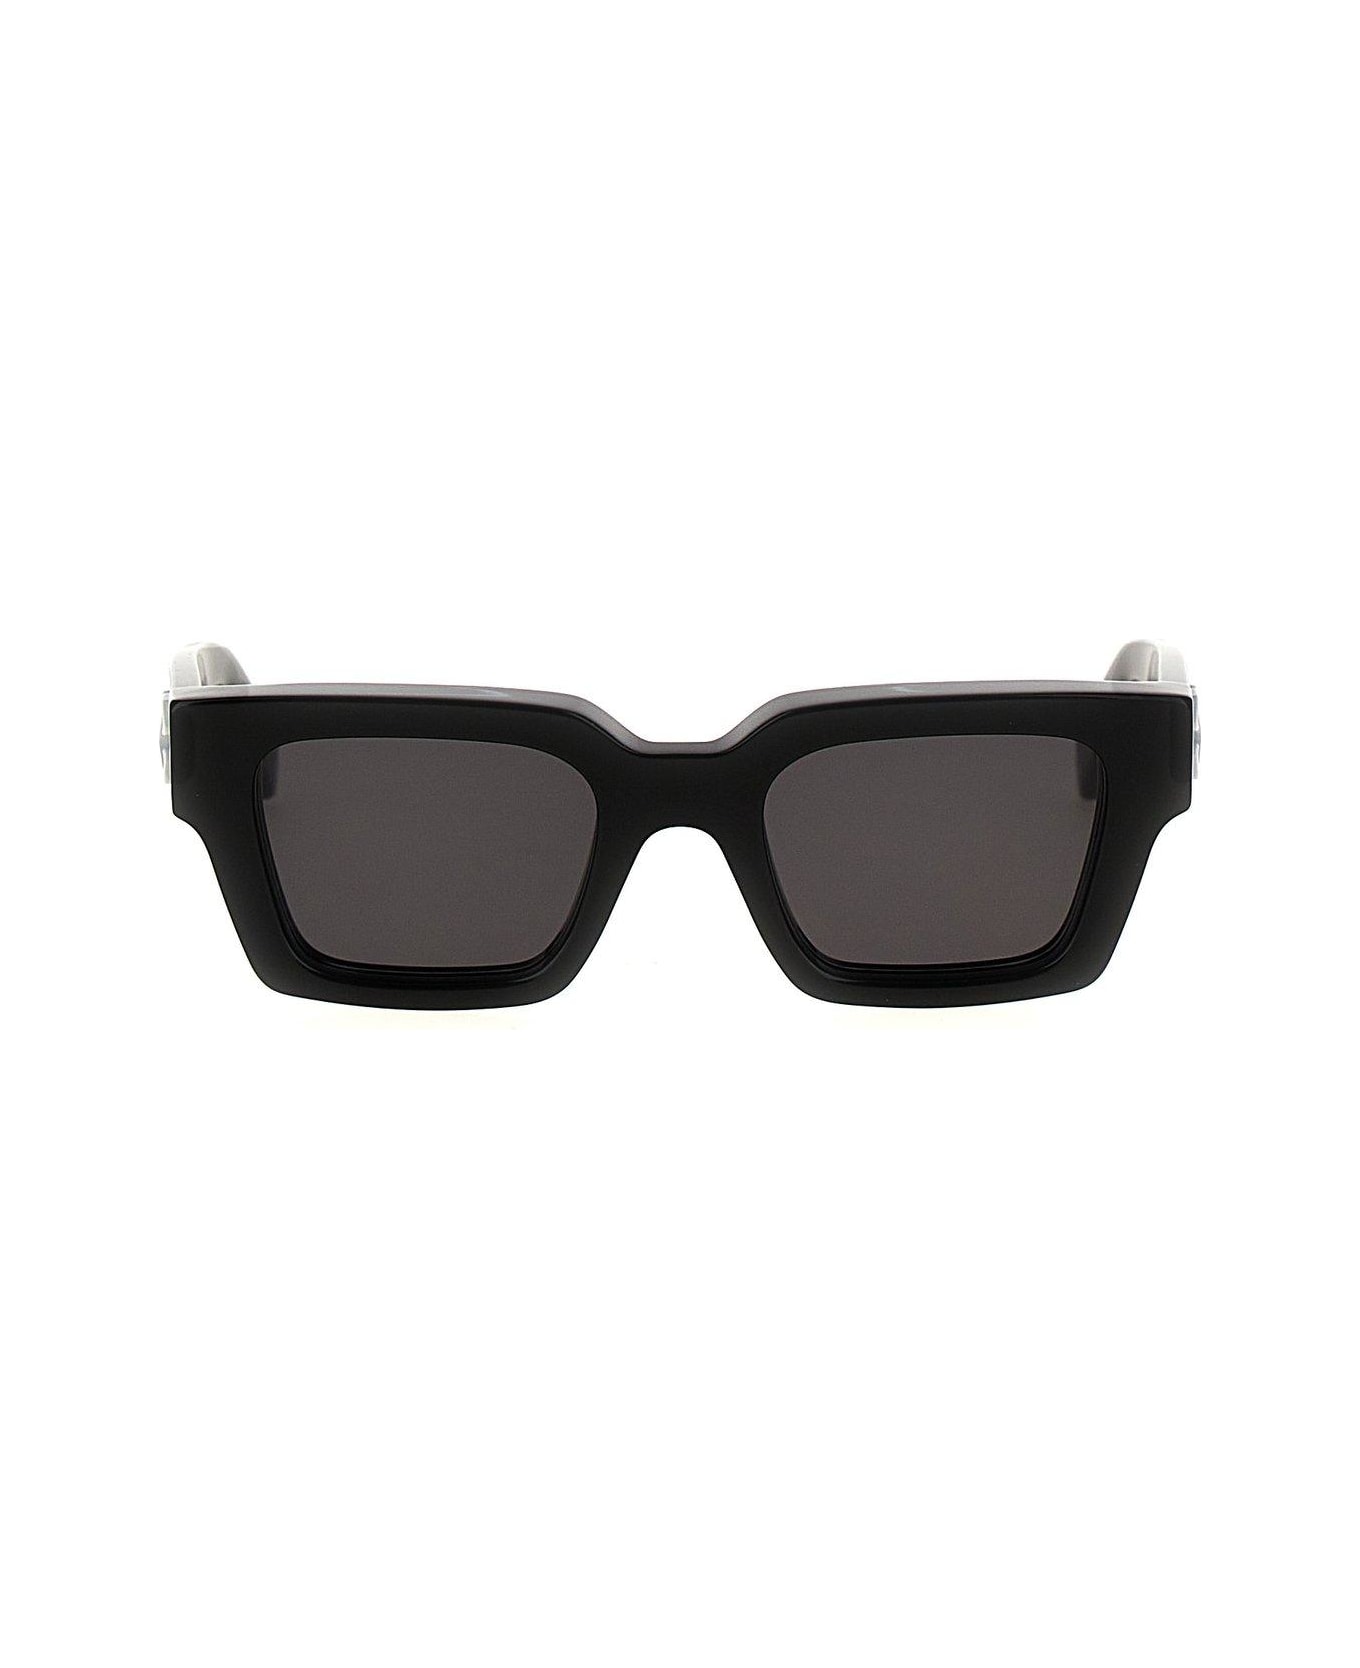 Off-White Virgil L Sunglasses - 1007 BLACK